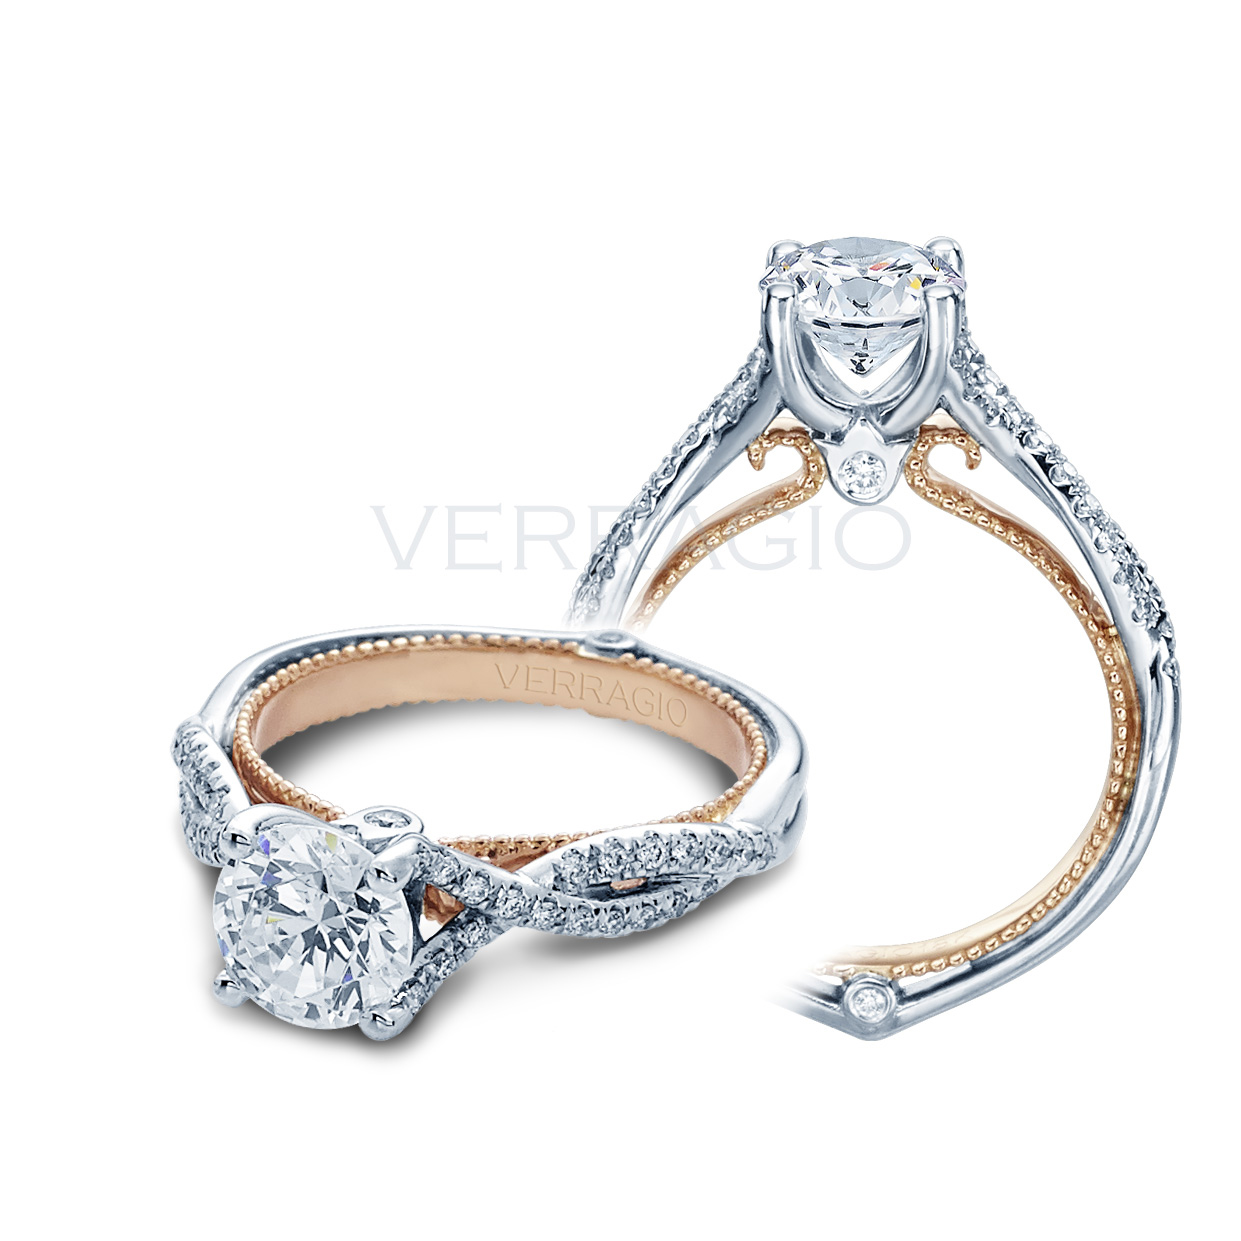 Gorgeous Diamond Verragio Engagement Ring!